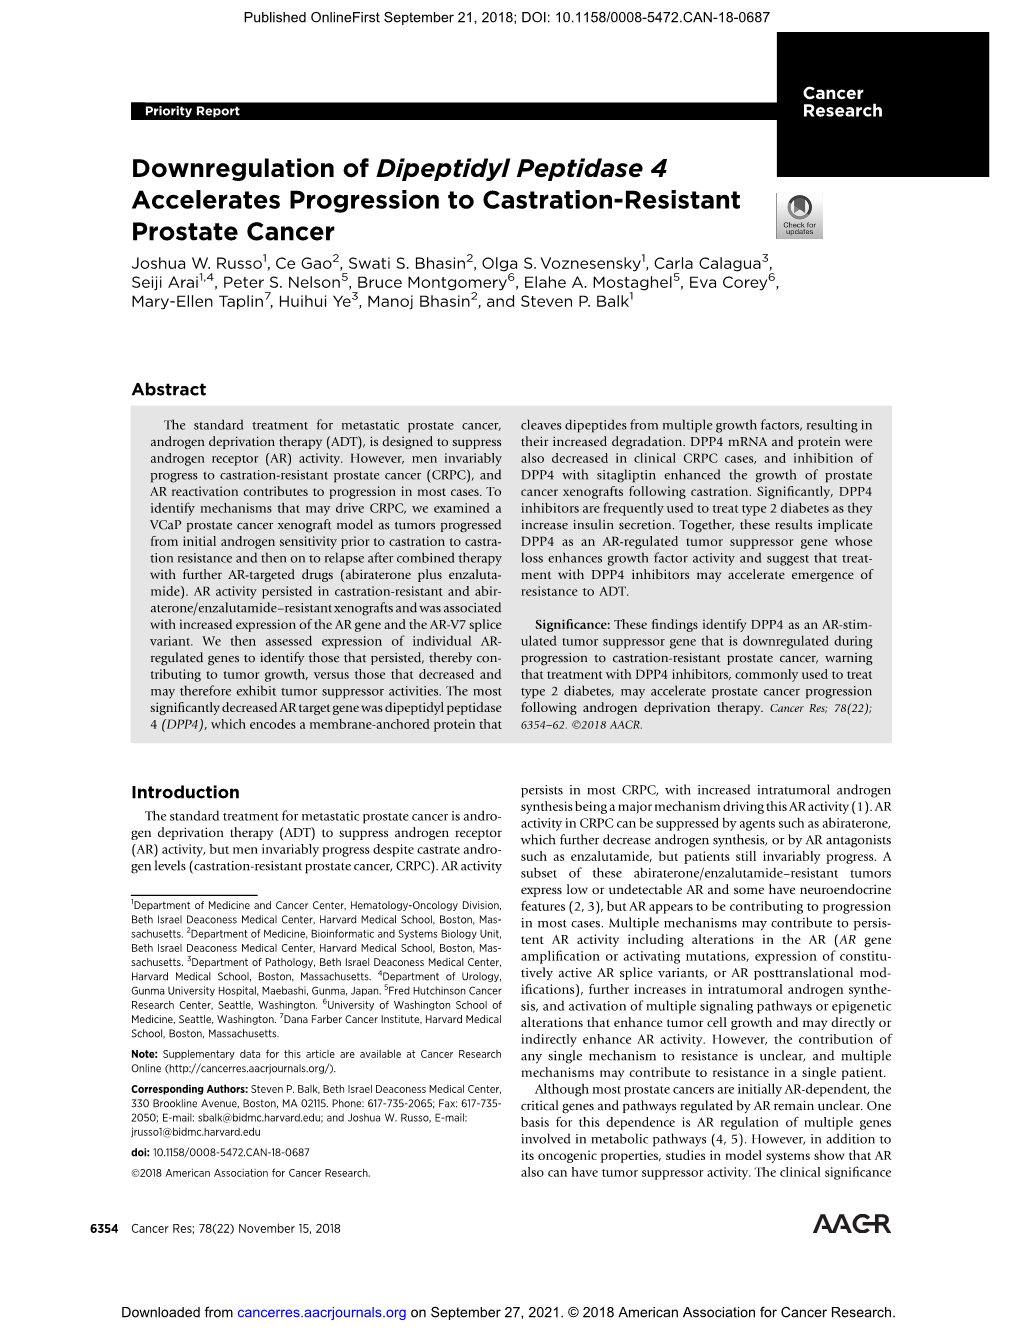 Downregulation of Dipeptidyl Peptidase 4 Accelerates Progression to Castration-Resistant Prostate Cancer Joshua W